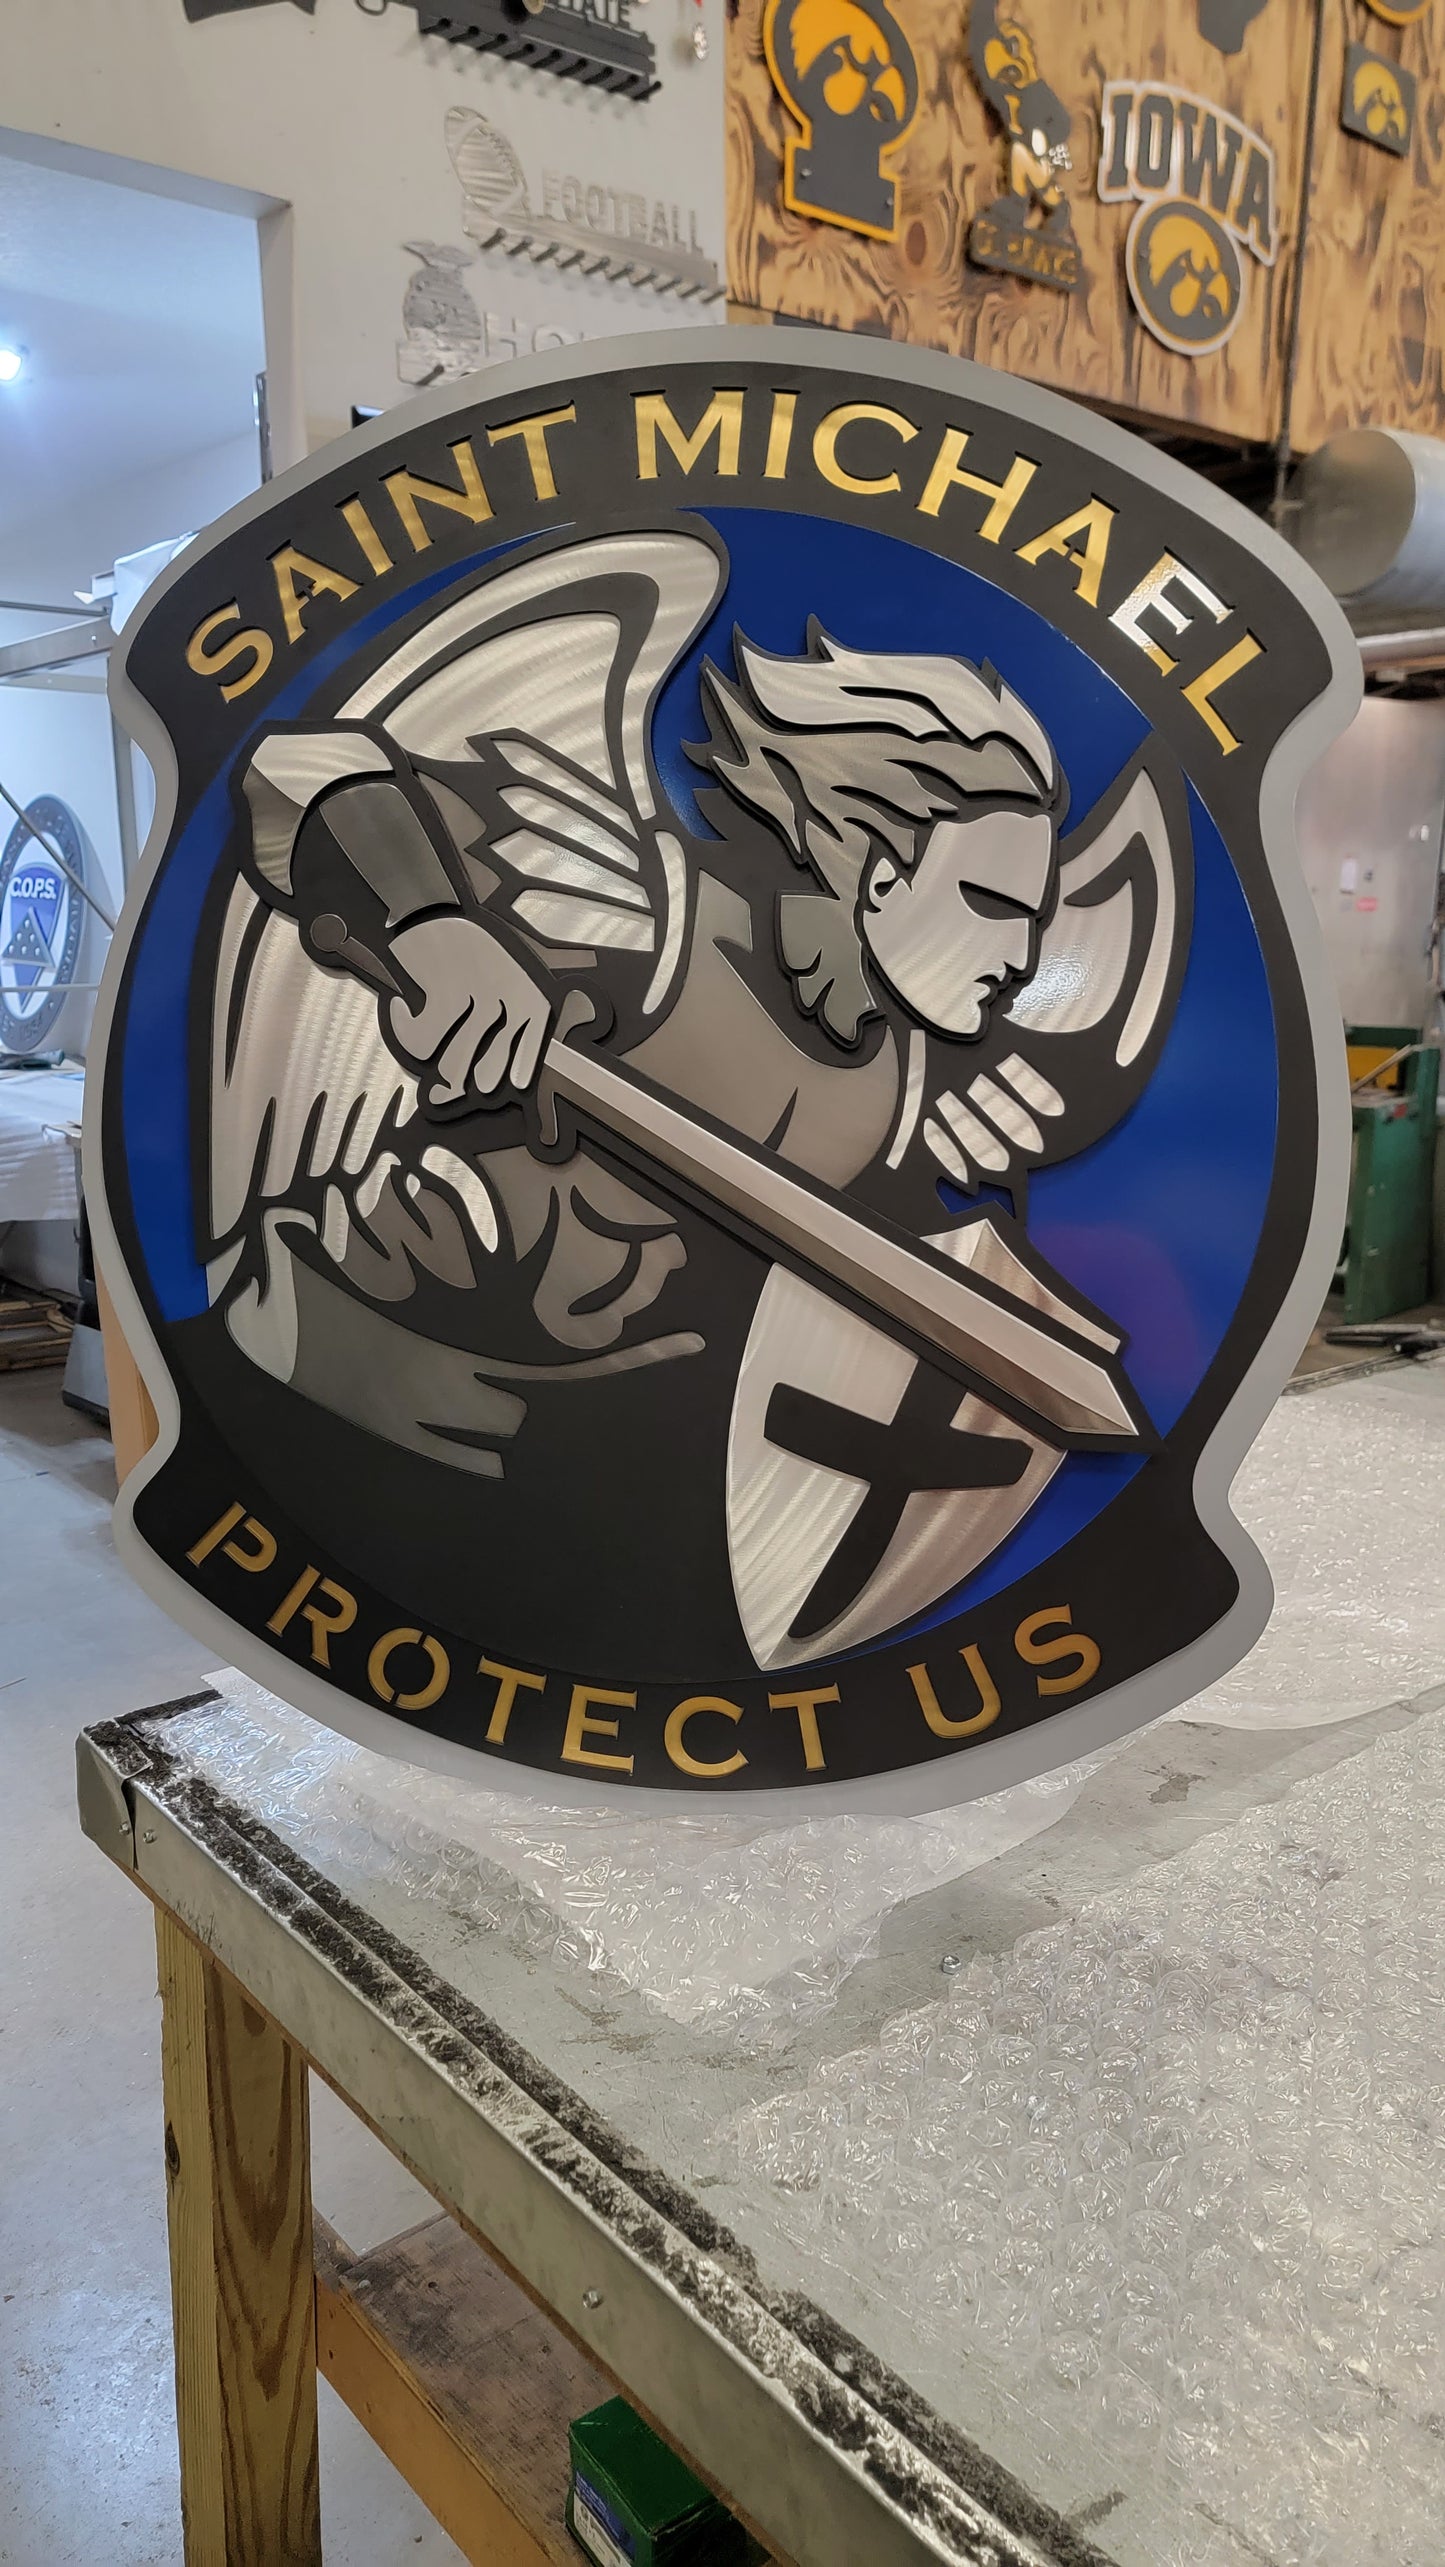 Saint Michael Protect Us Badge